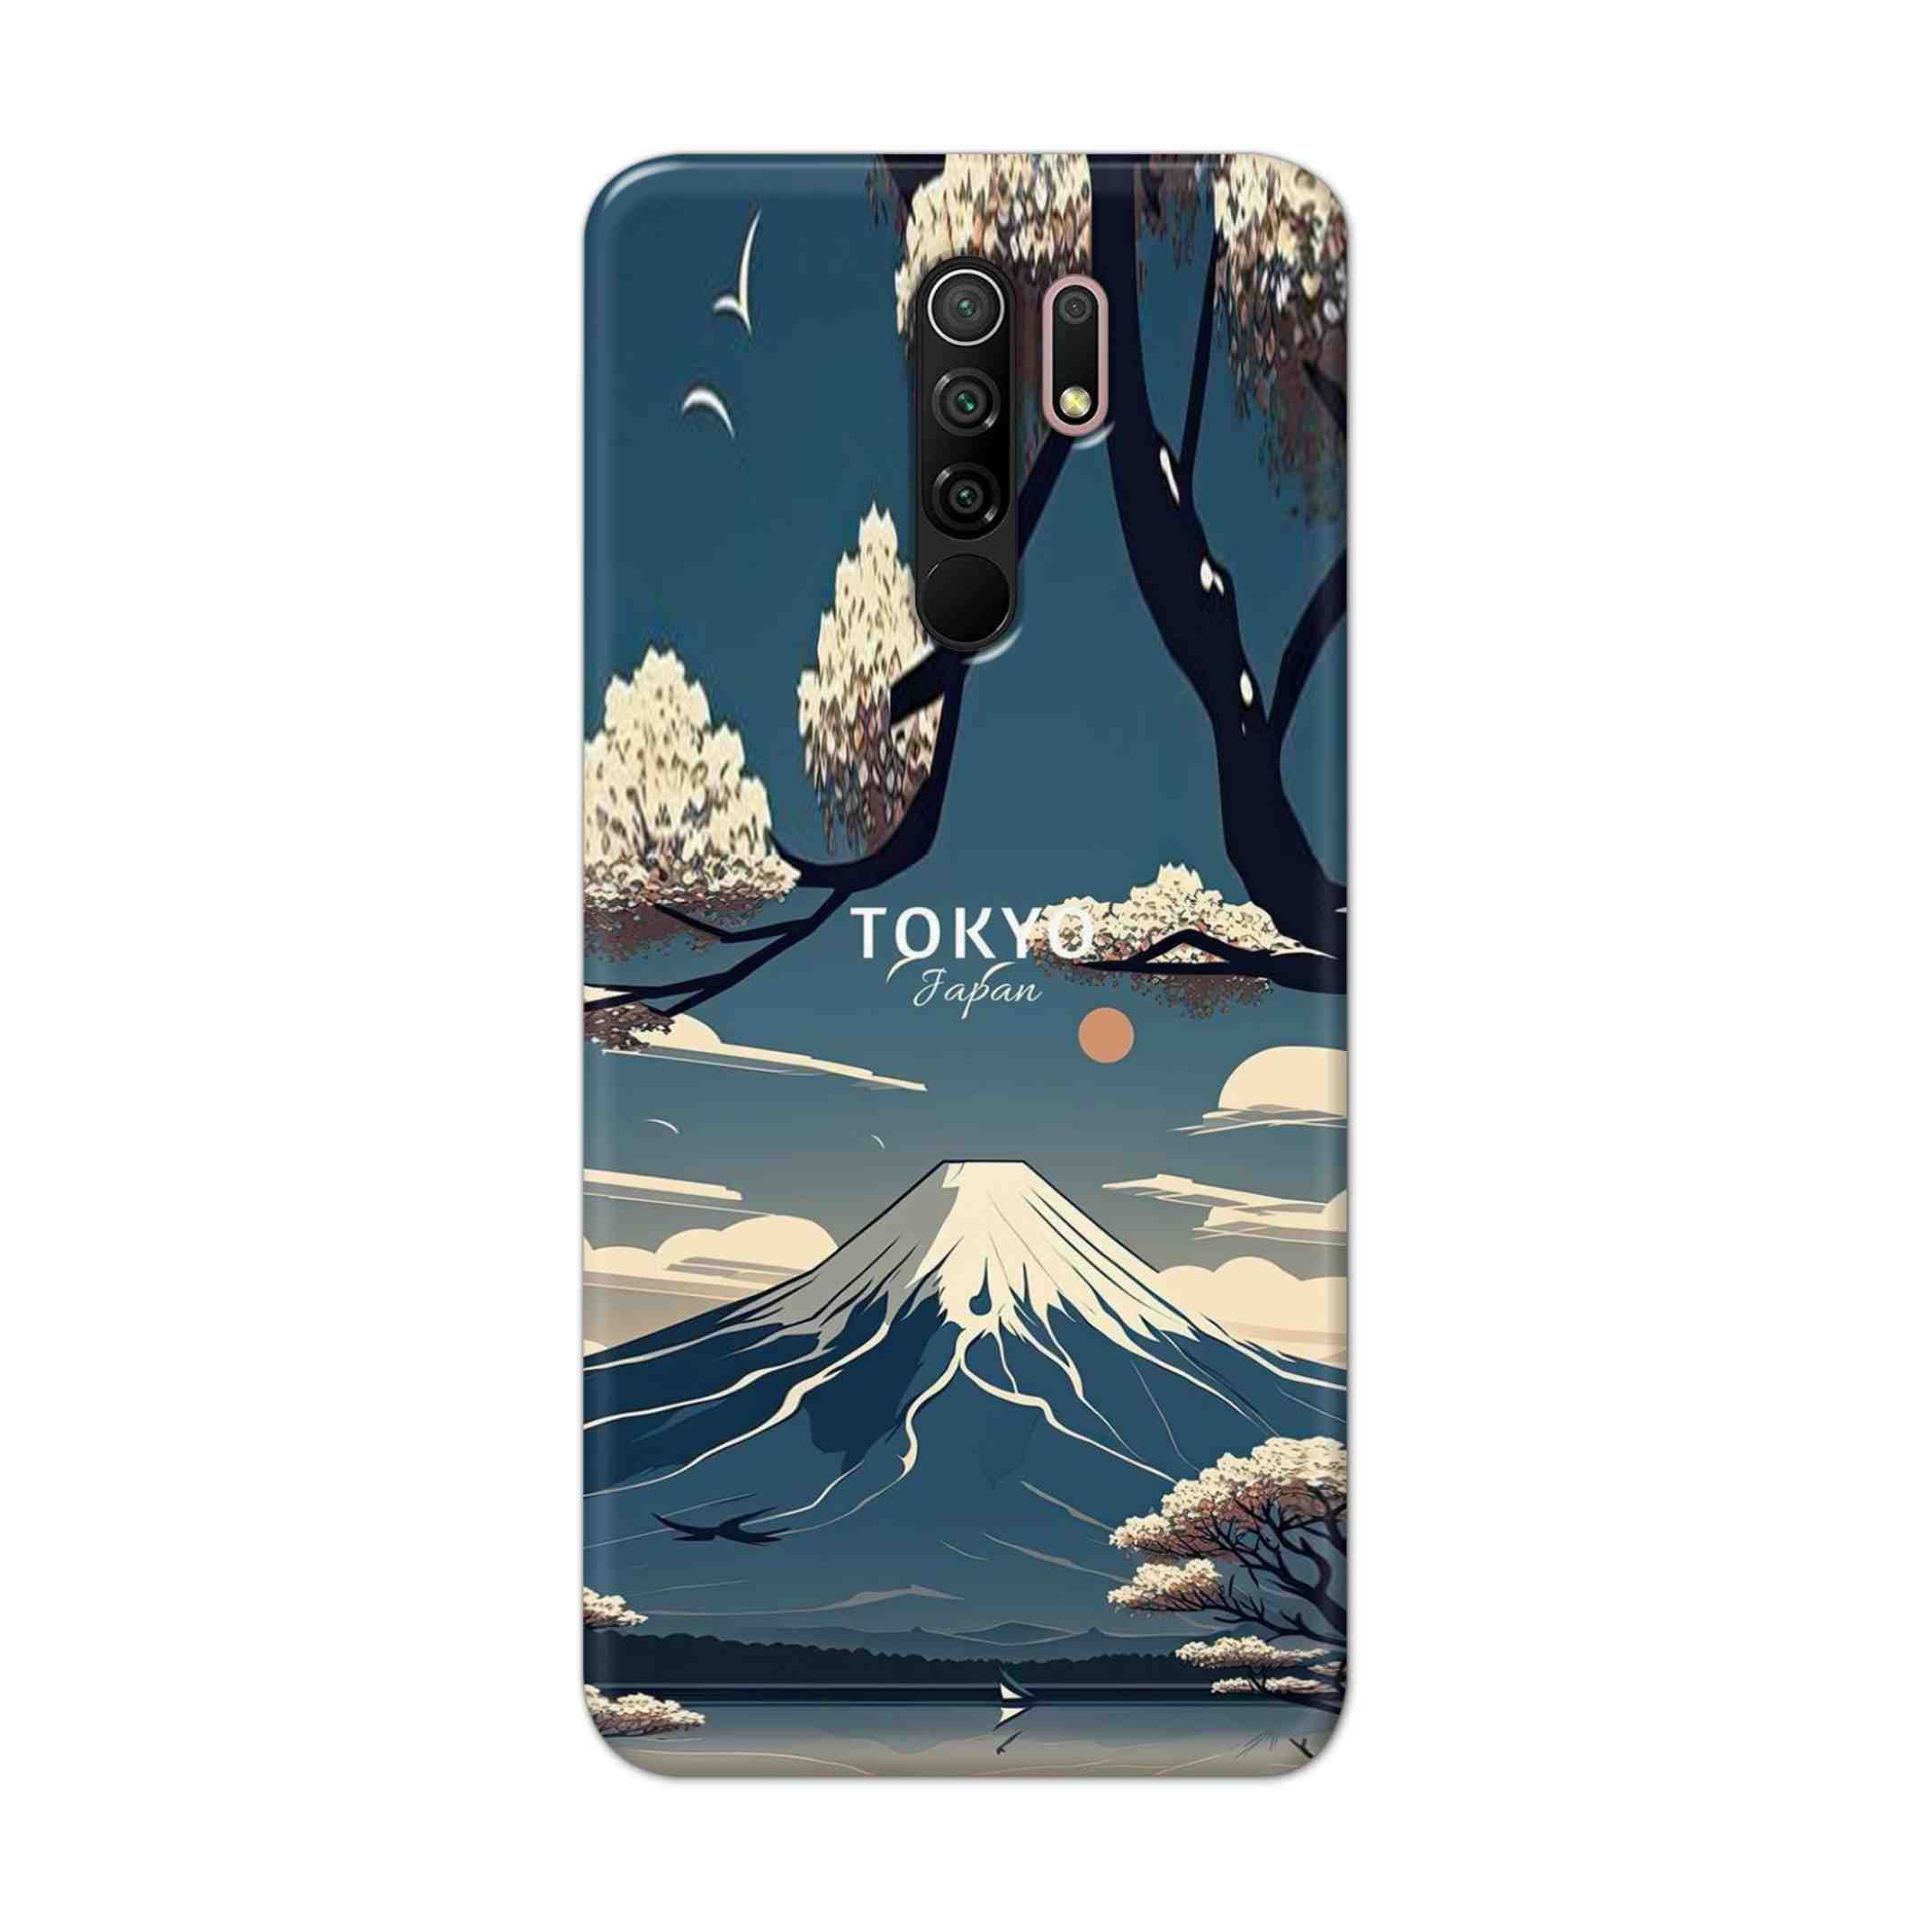 Buy Tokyo Hard Back Mobile Phone Case Cover For Xiaomi Redmi 9 Prime Online